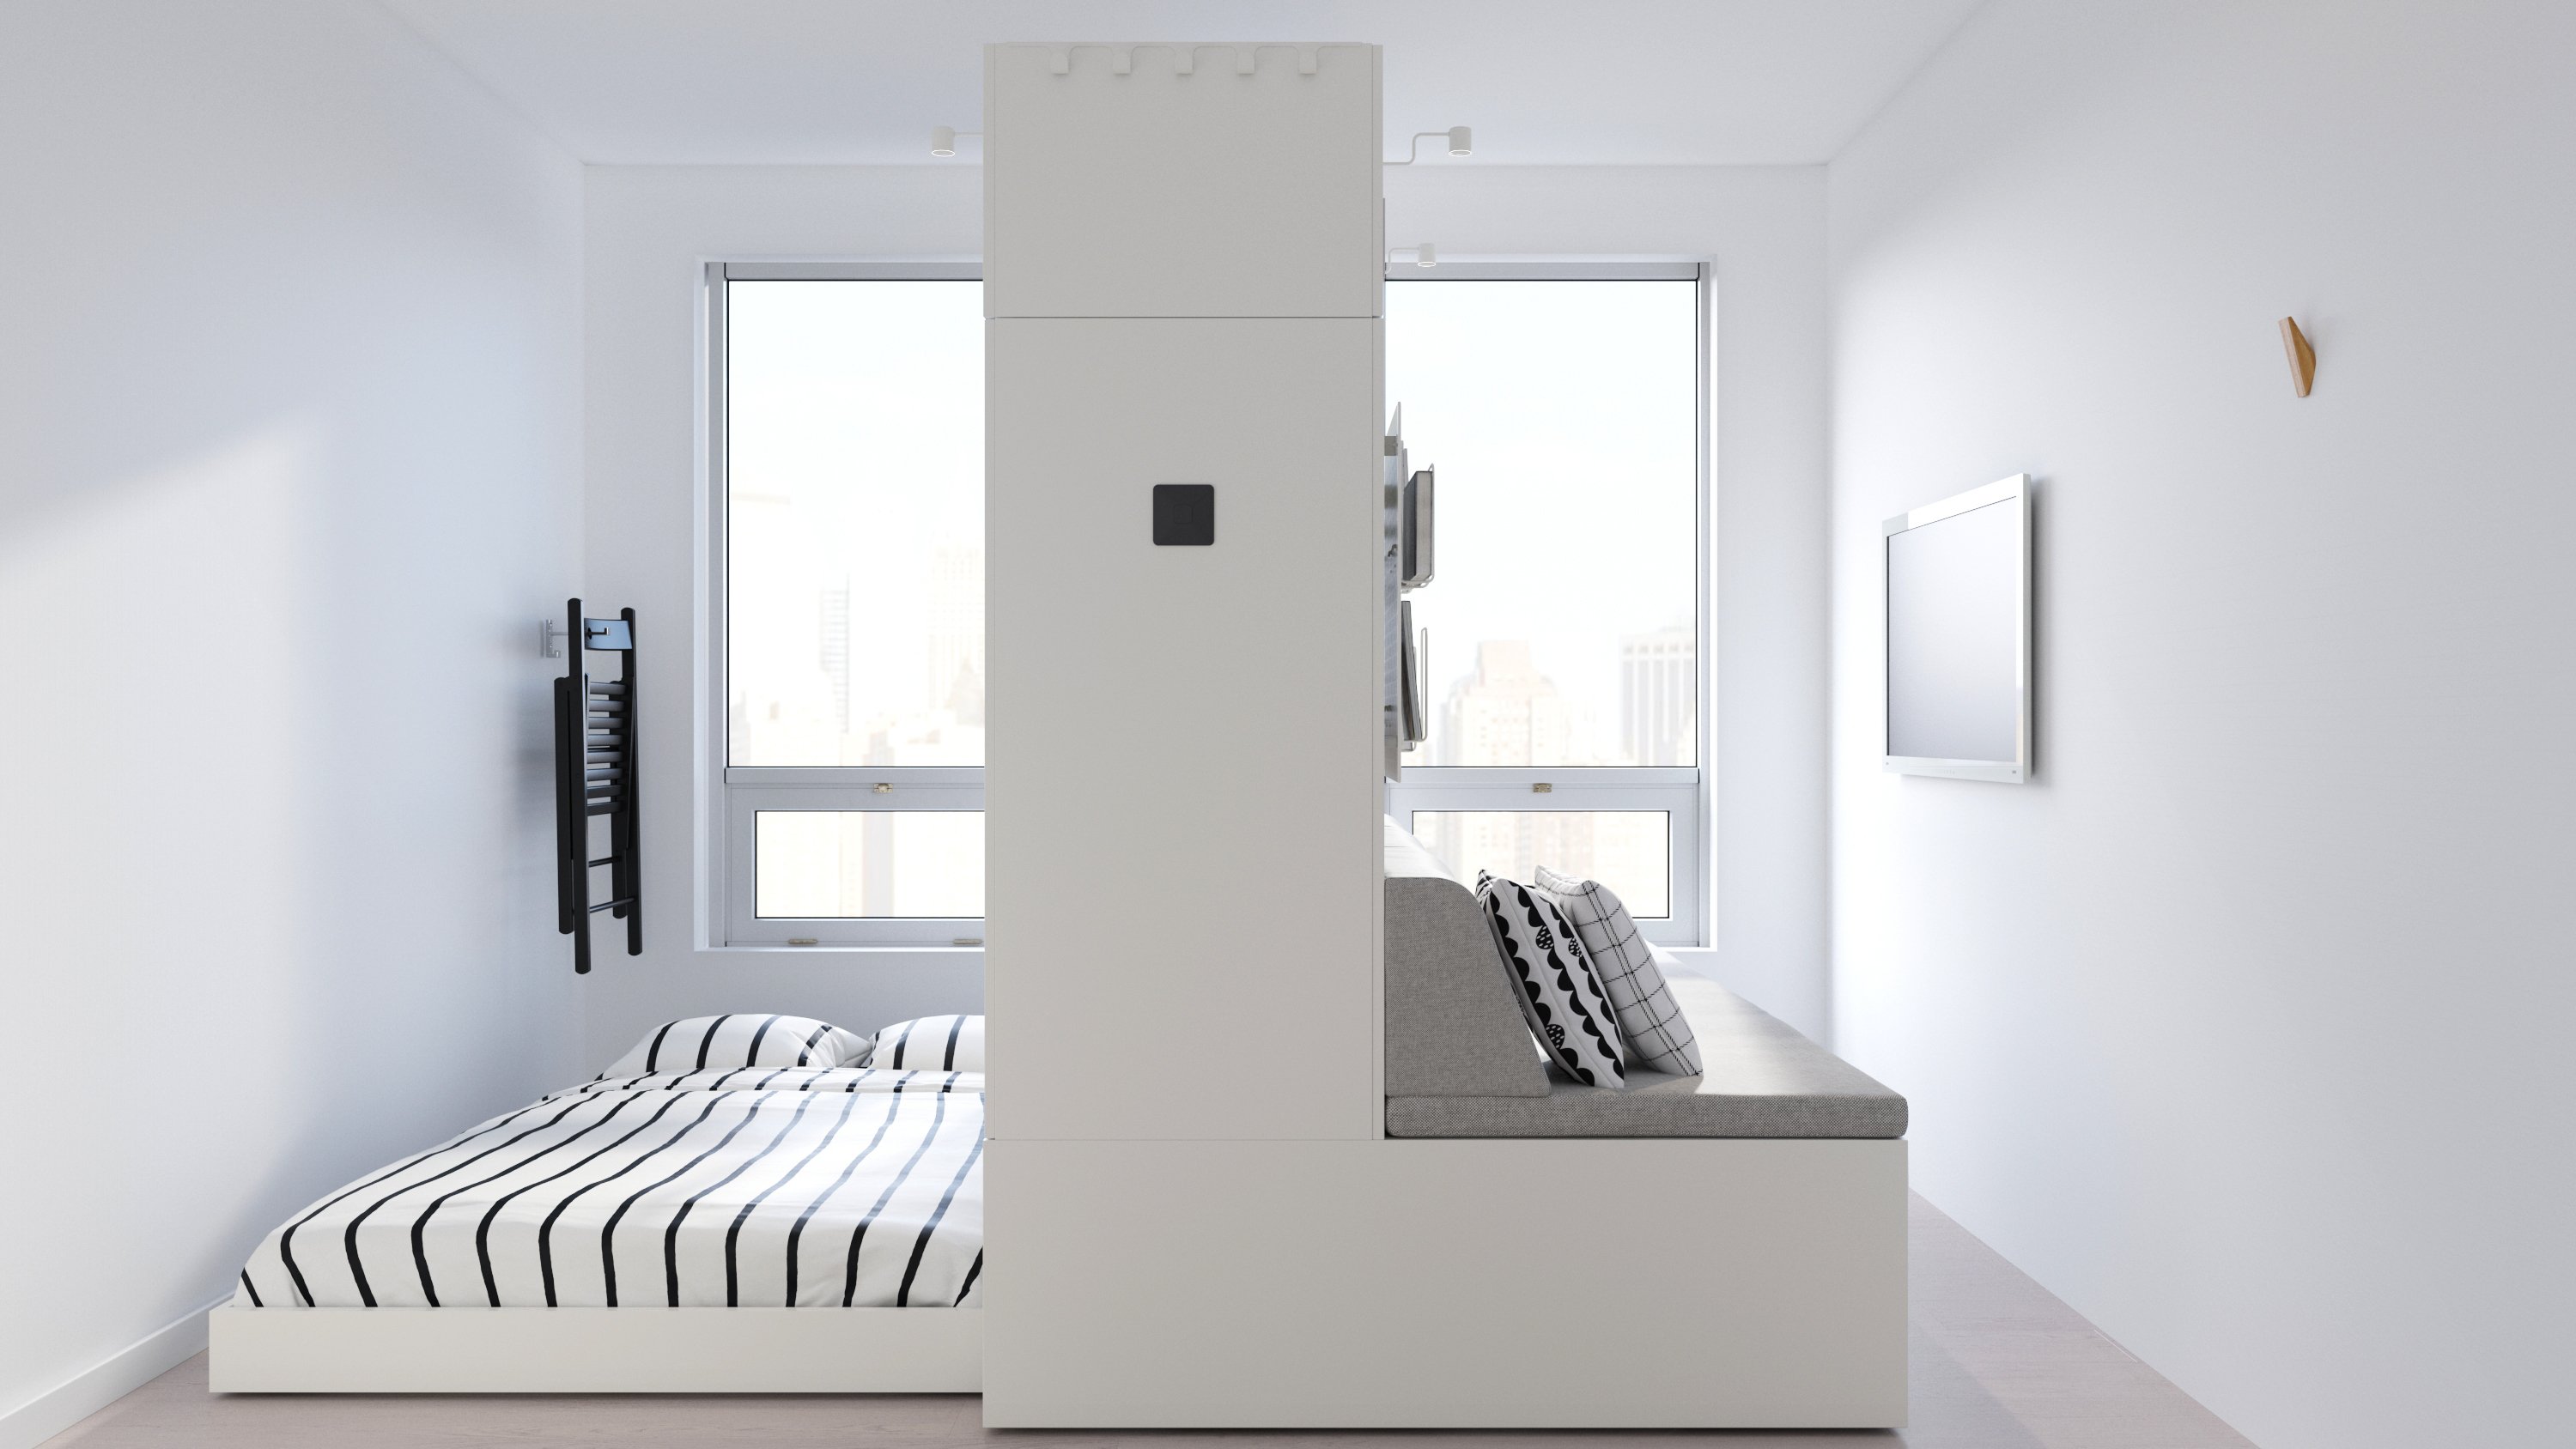 Ikea Rognan robotic furniture in bed mode.